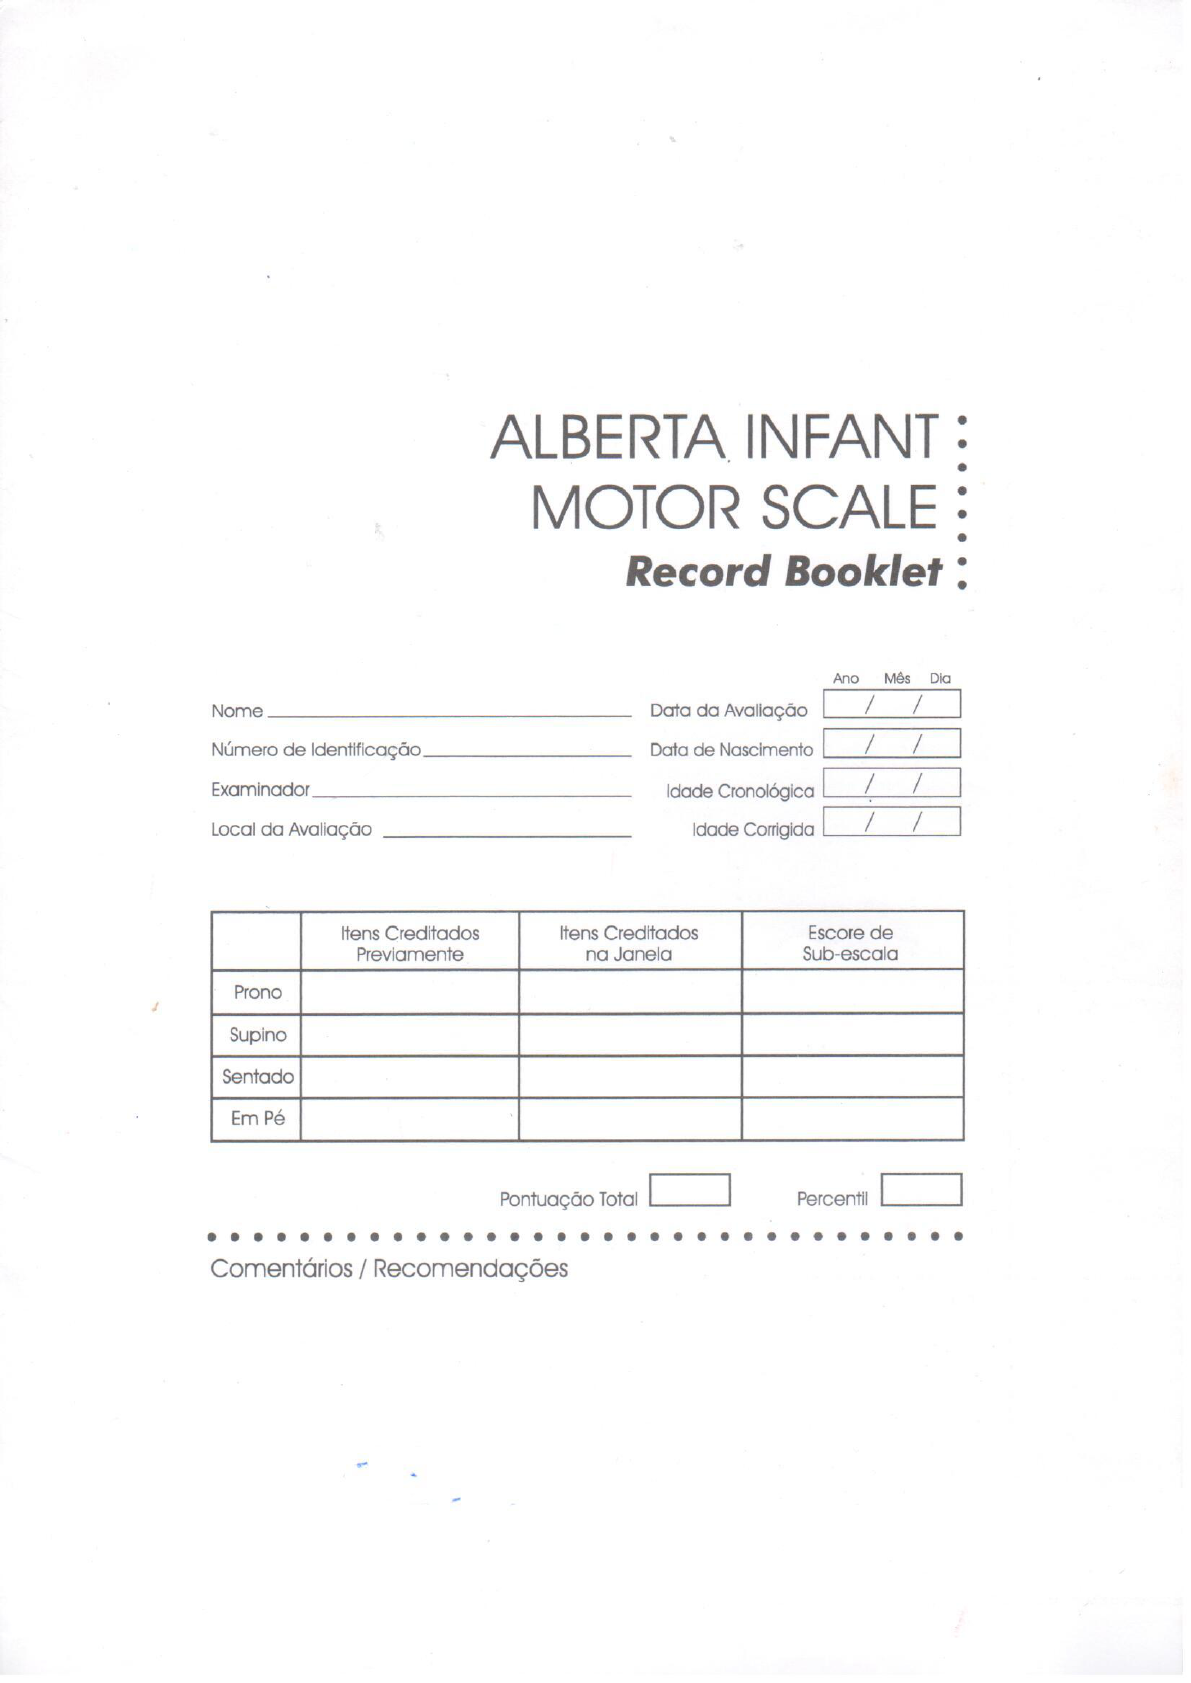 Alberta Infant Motor Scale (AIMS) Fisioterapia em Pediatria